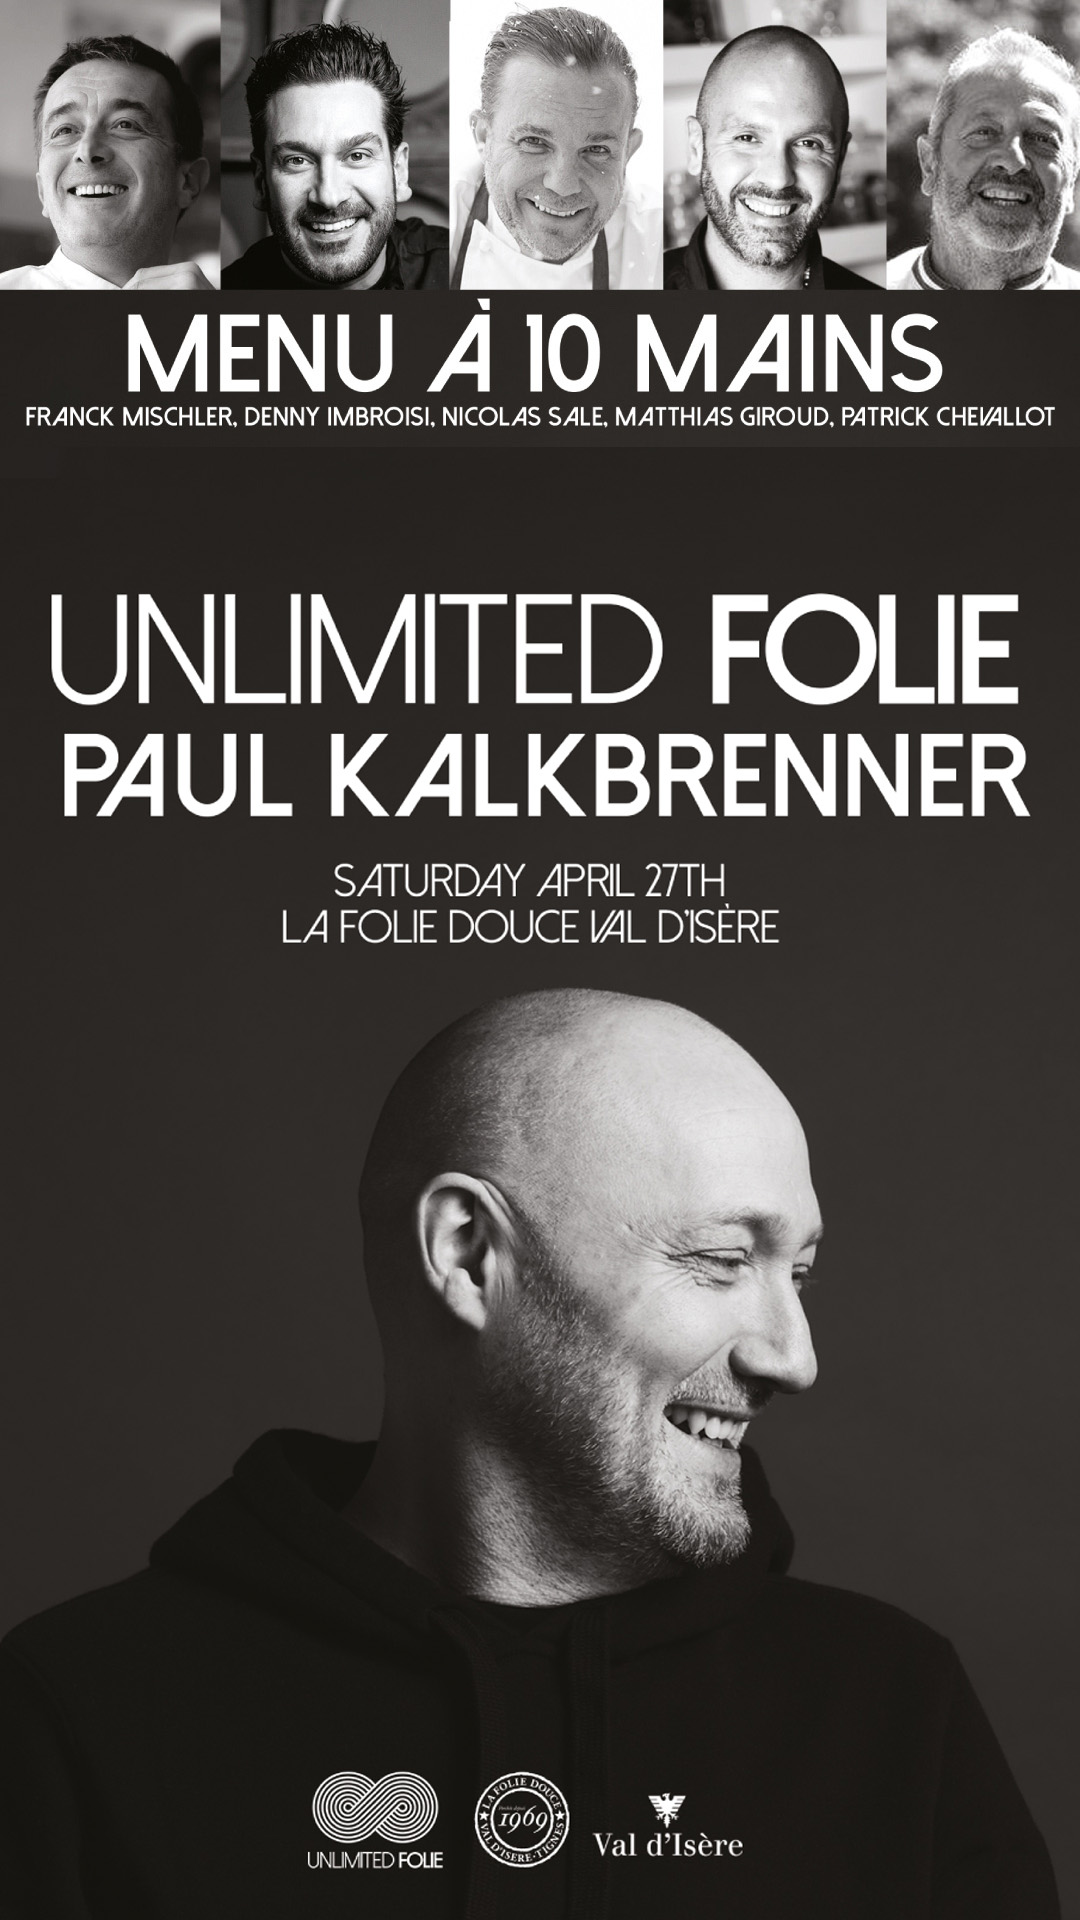 Menu à 10 mains & concert de Paul Kalkbrenner